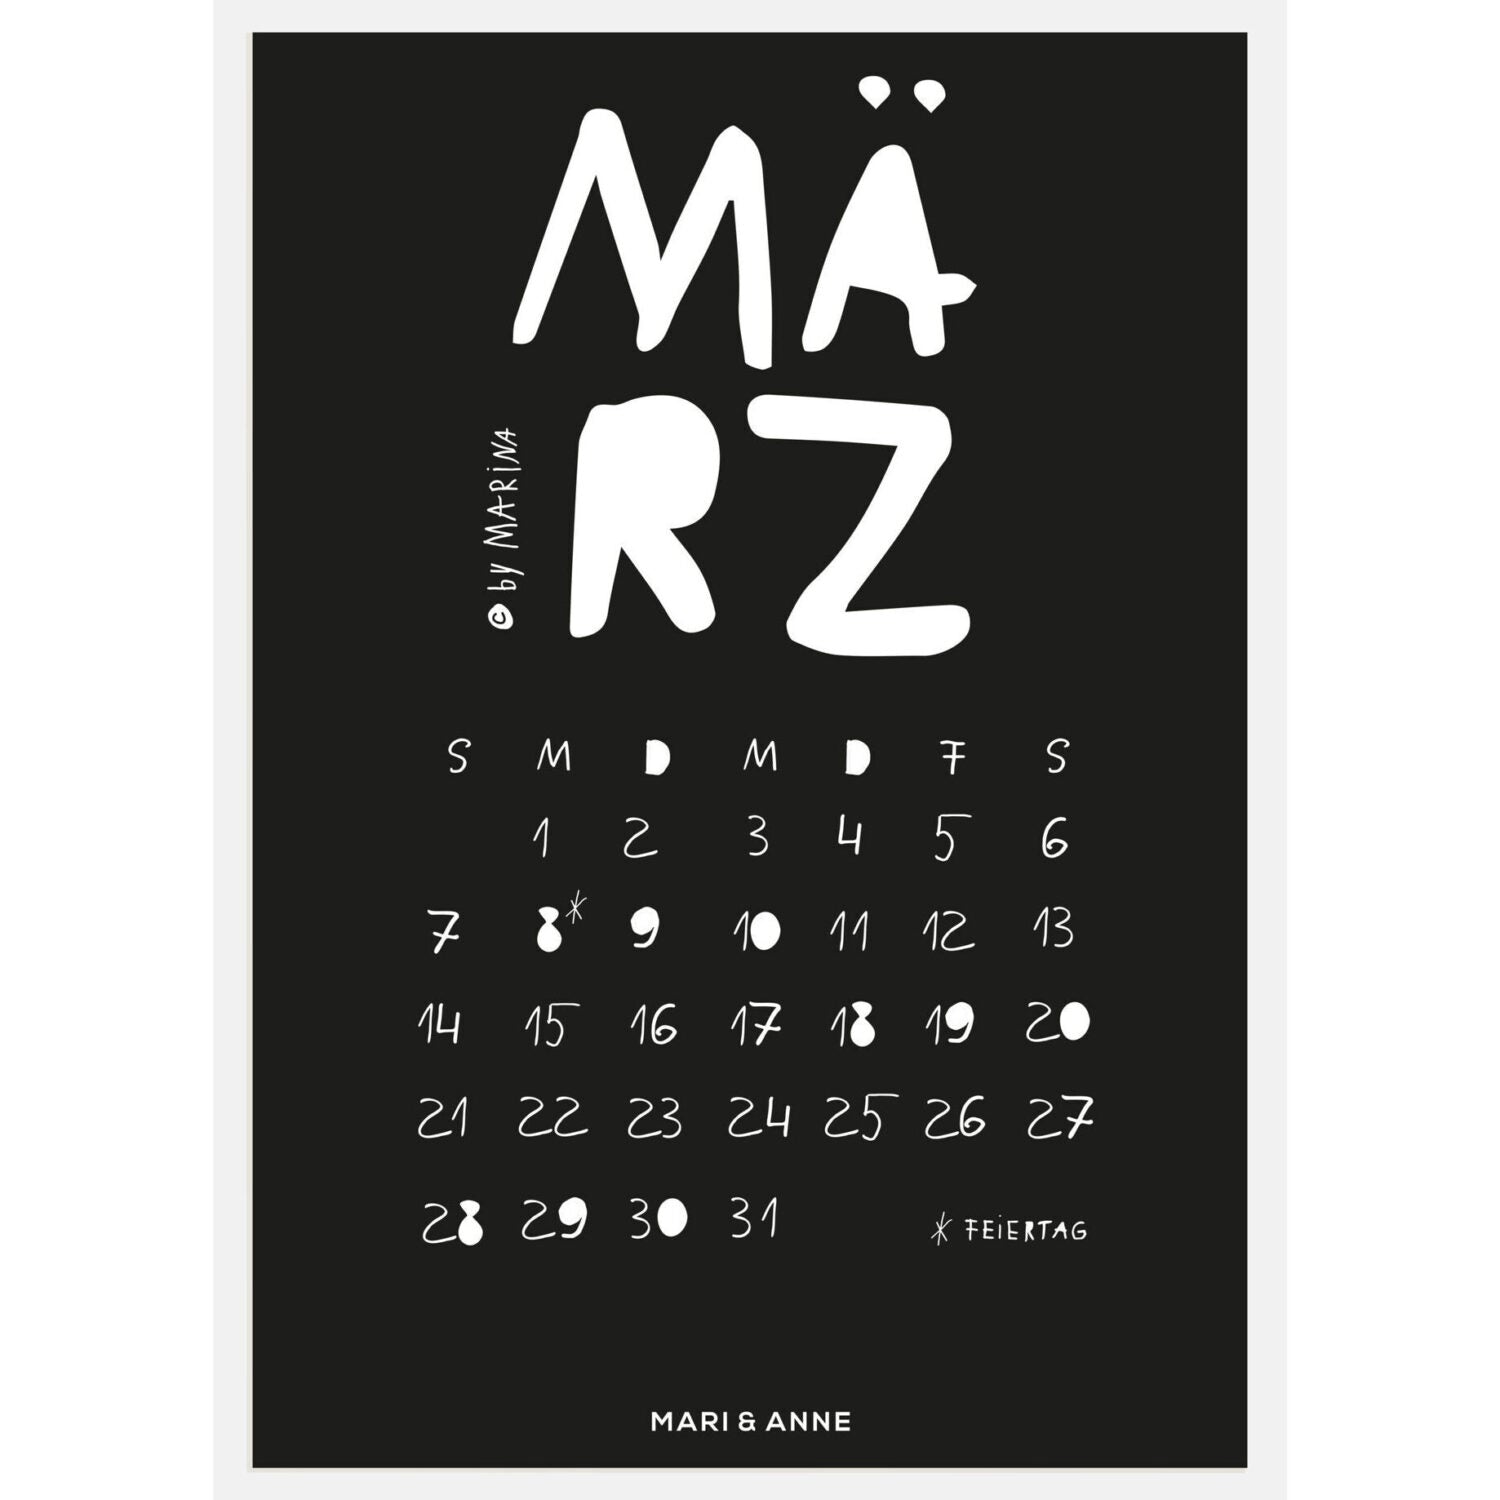 MARI&ANNE Kalender 2021 by Marina&Friends (5)